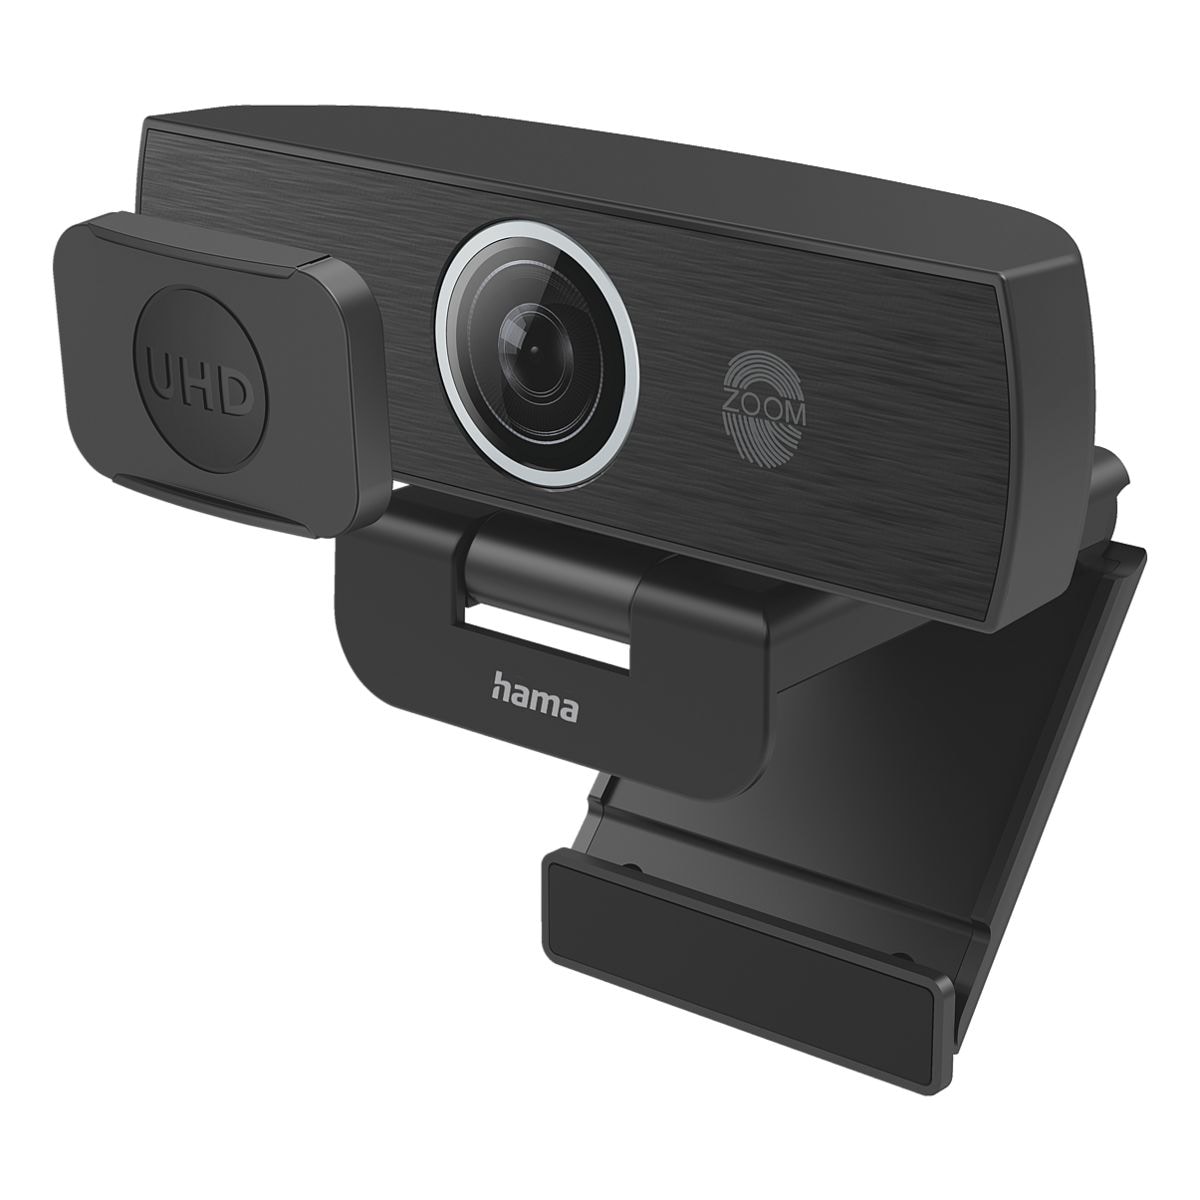 Hama PC-Webcam C-900 Pro UHD 4K